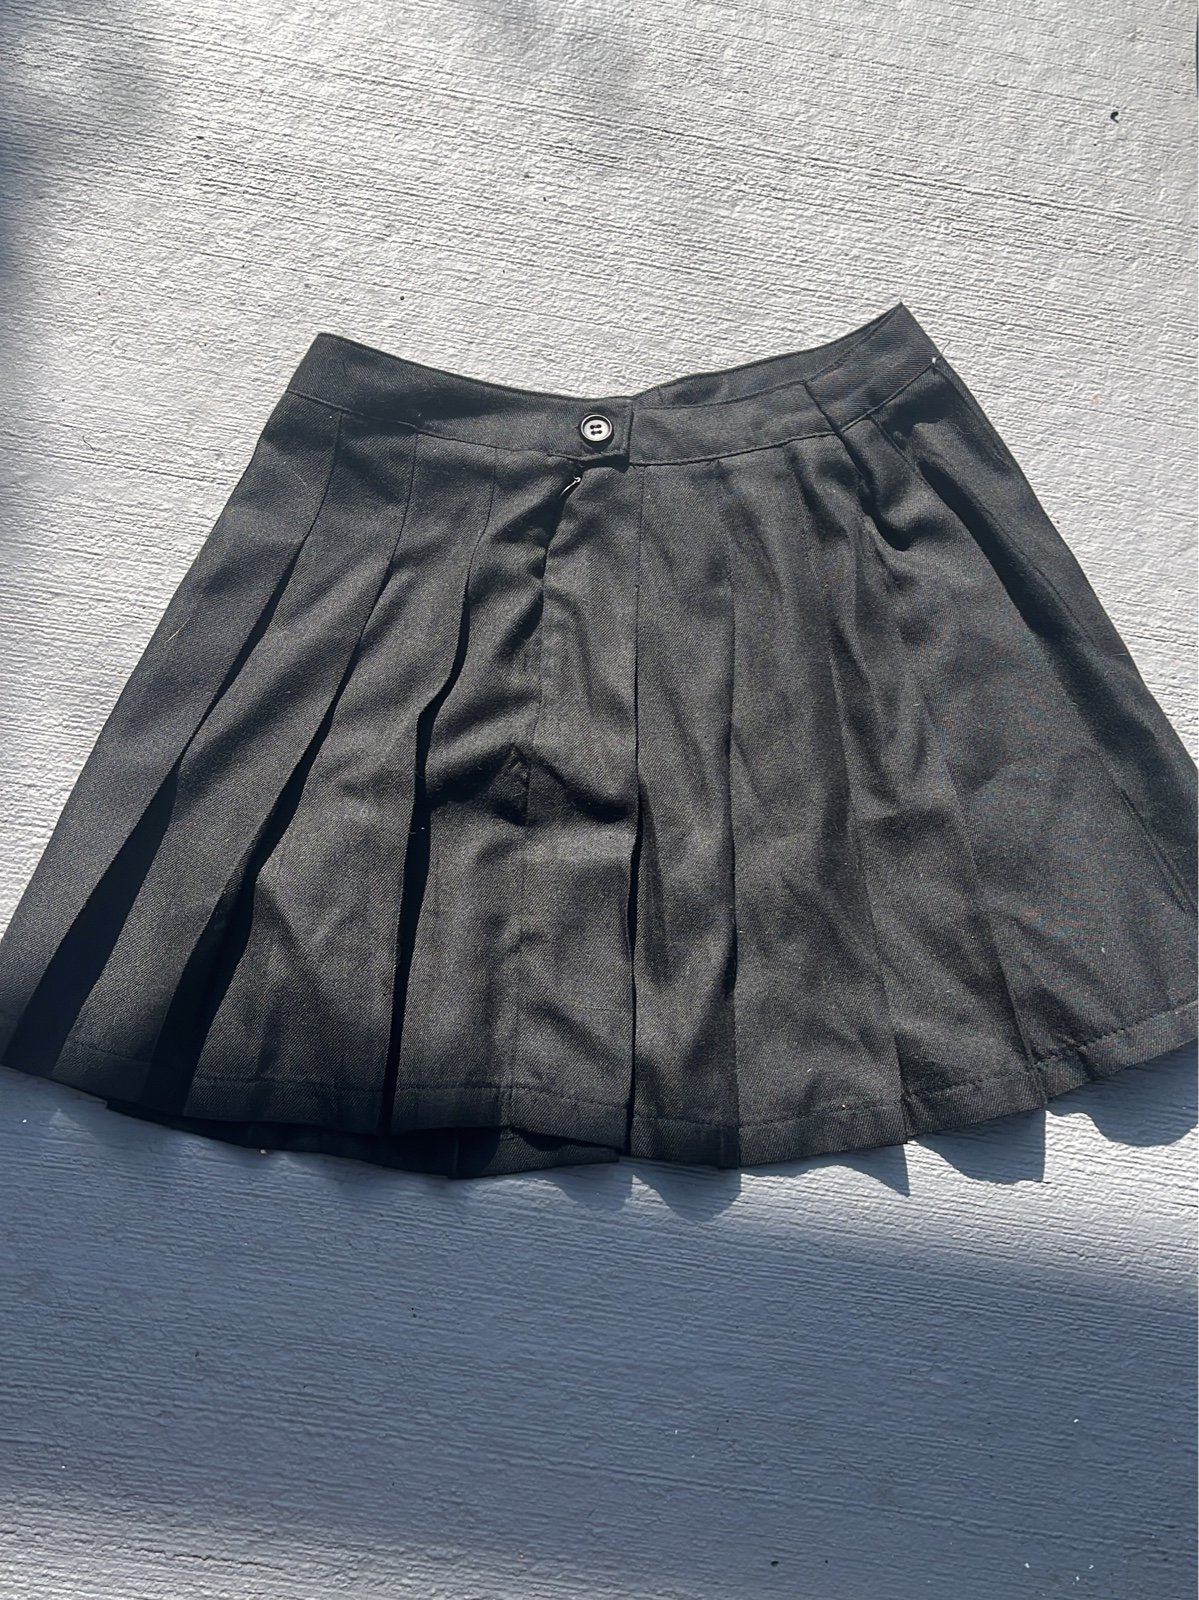 Popular Black pleated skirt Kp2GSmUXE on sale